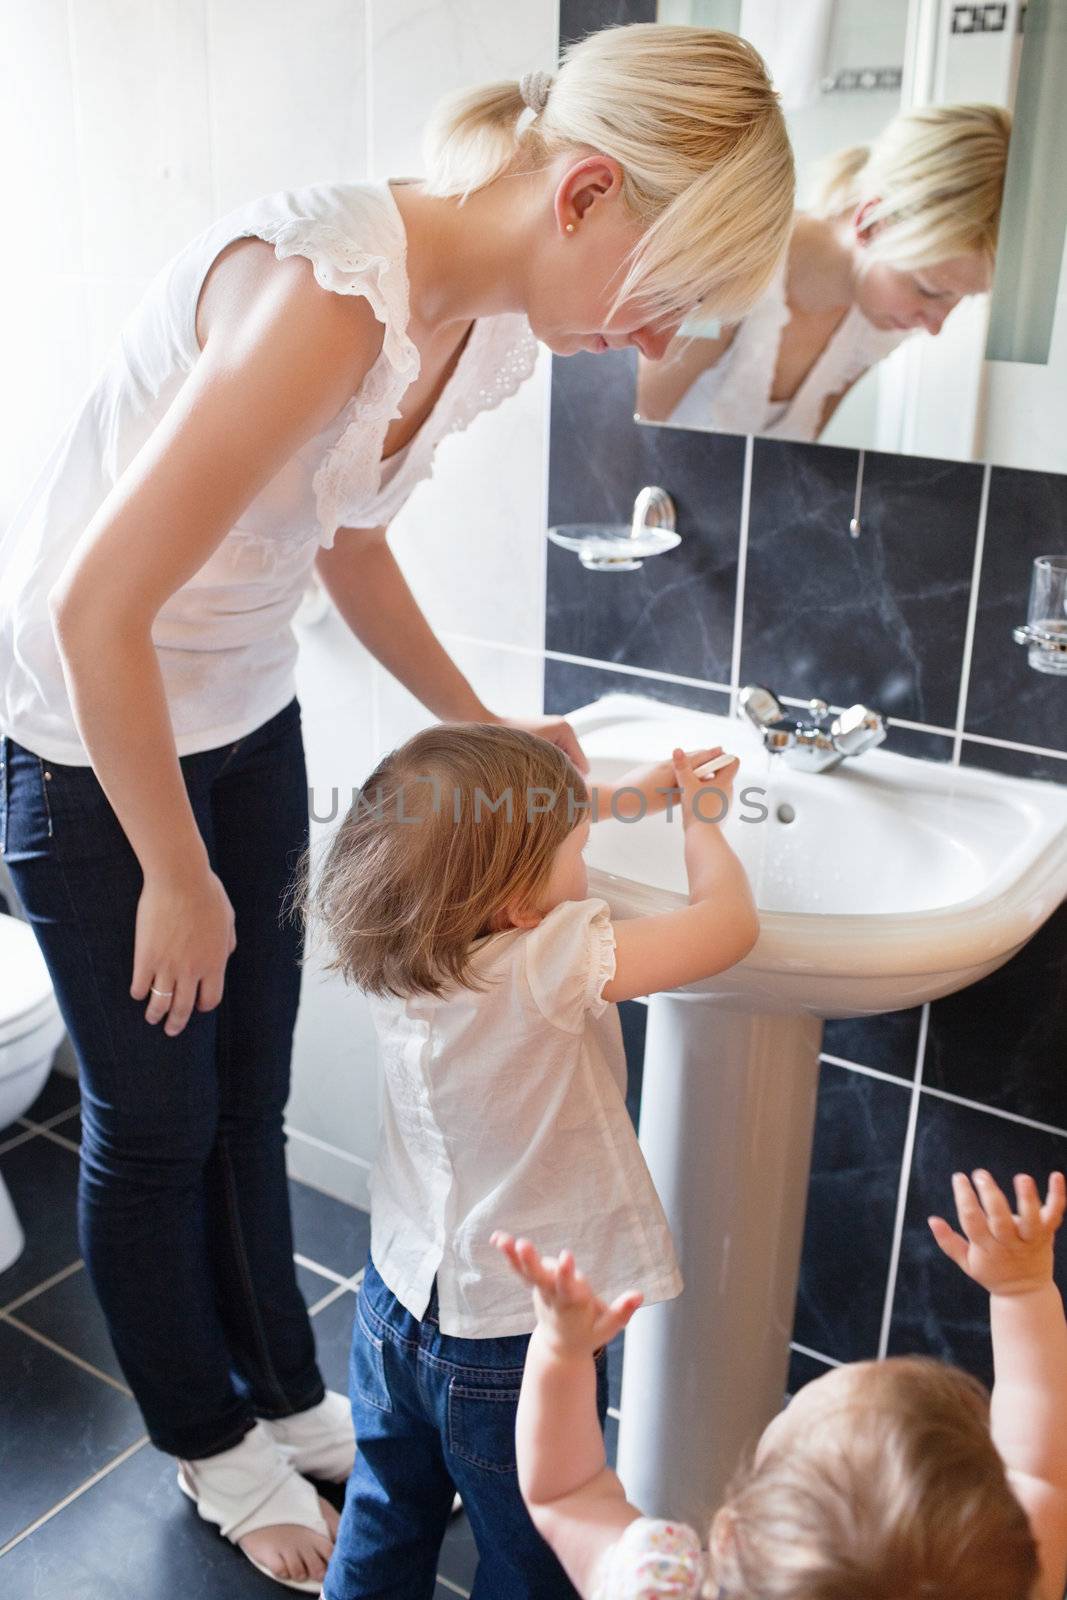 Family in the bathroom by Wavebreakmedia